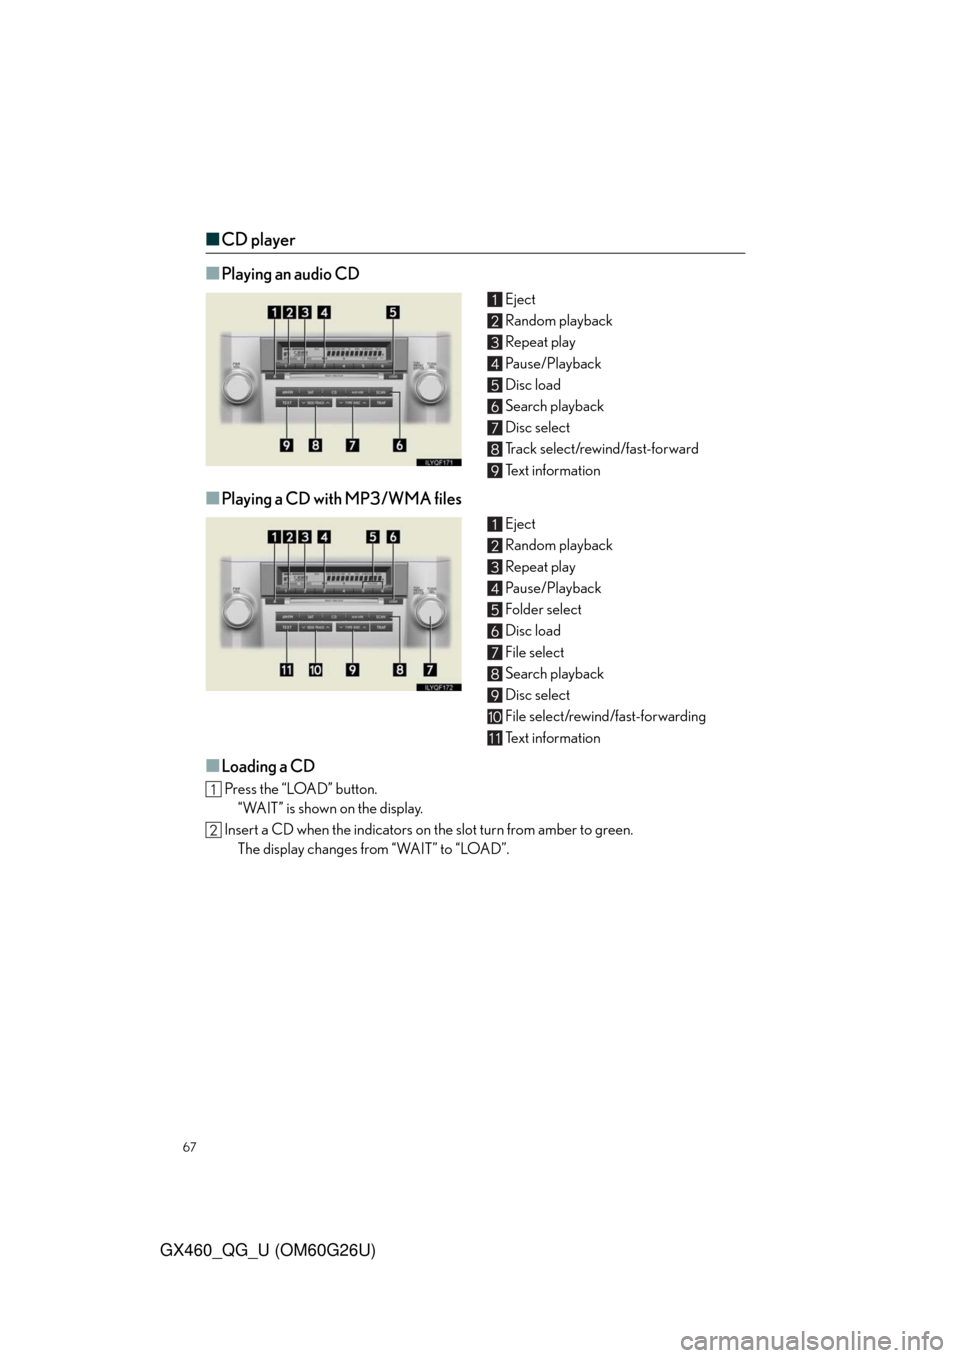 Lexus GX460 2011  Warranty and Services Guide / LEXUS 2011 GX460  QUICK GUIDE (OM60G26U) Repair Manual 67
GX460_QG_U (OM60G26U)
■CD player
■
Playing an audio CD
Eject
Random playback 
Repeat play
Pause/Playback
Disc load
Search playback
Disc select
Track select/rewind/fast-forward
Te x t  i n f o r